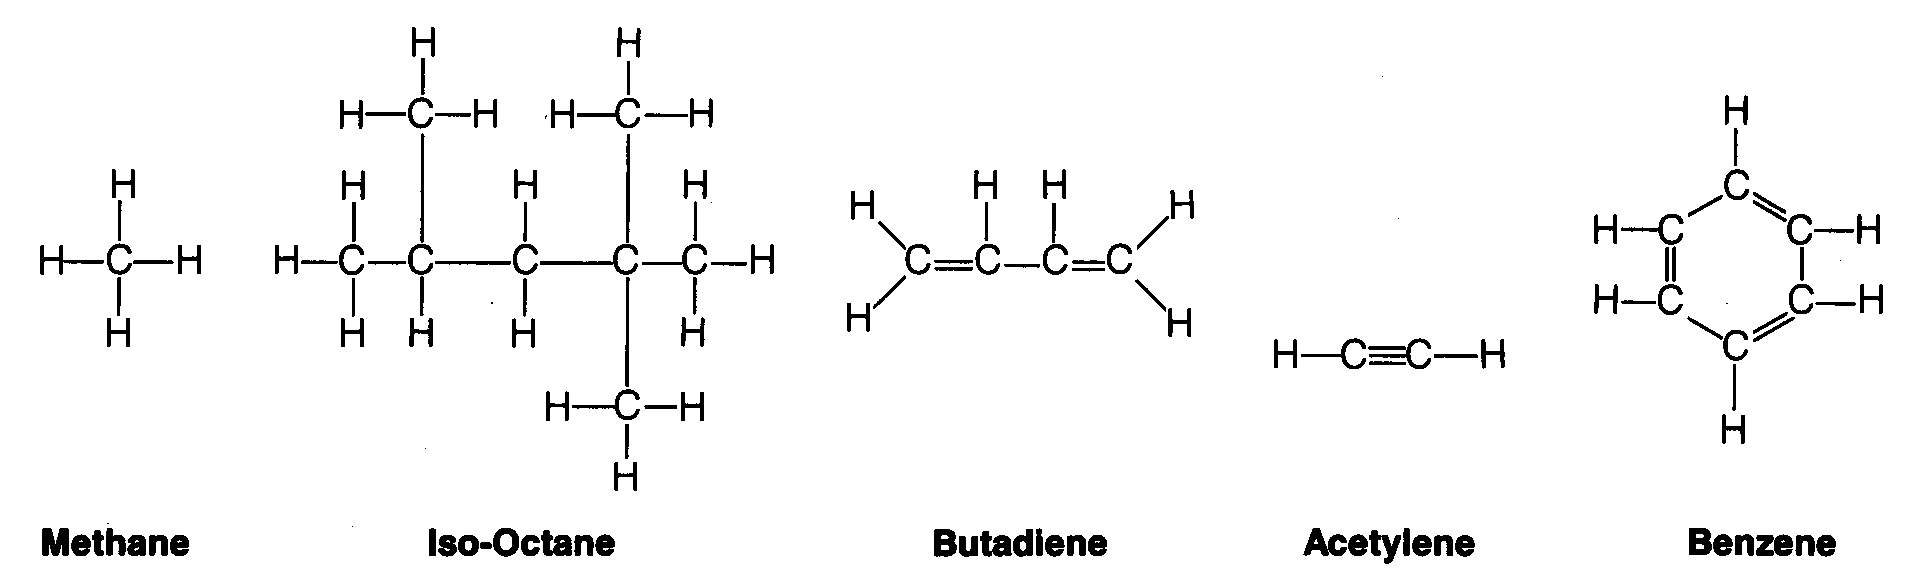 Structural formulae showing carbon bonding